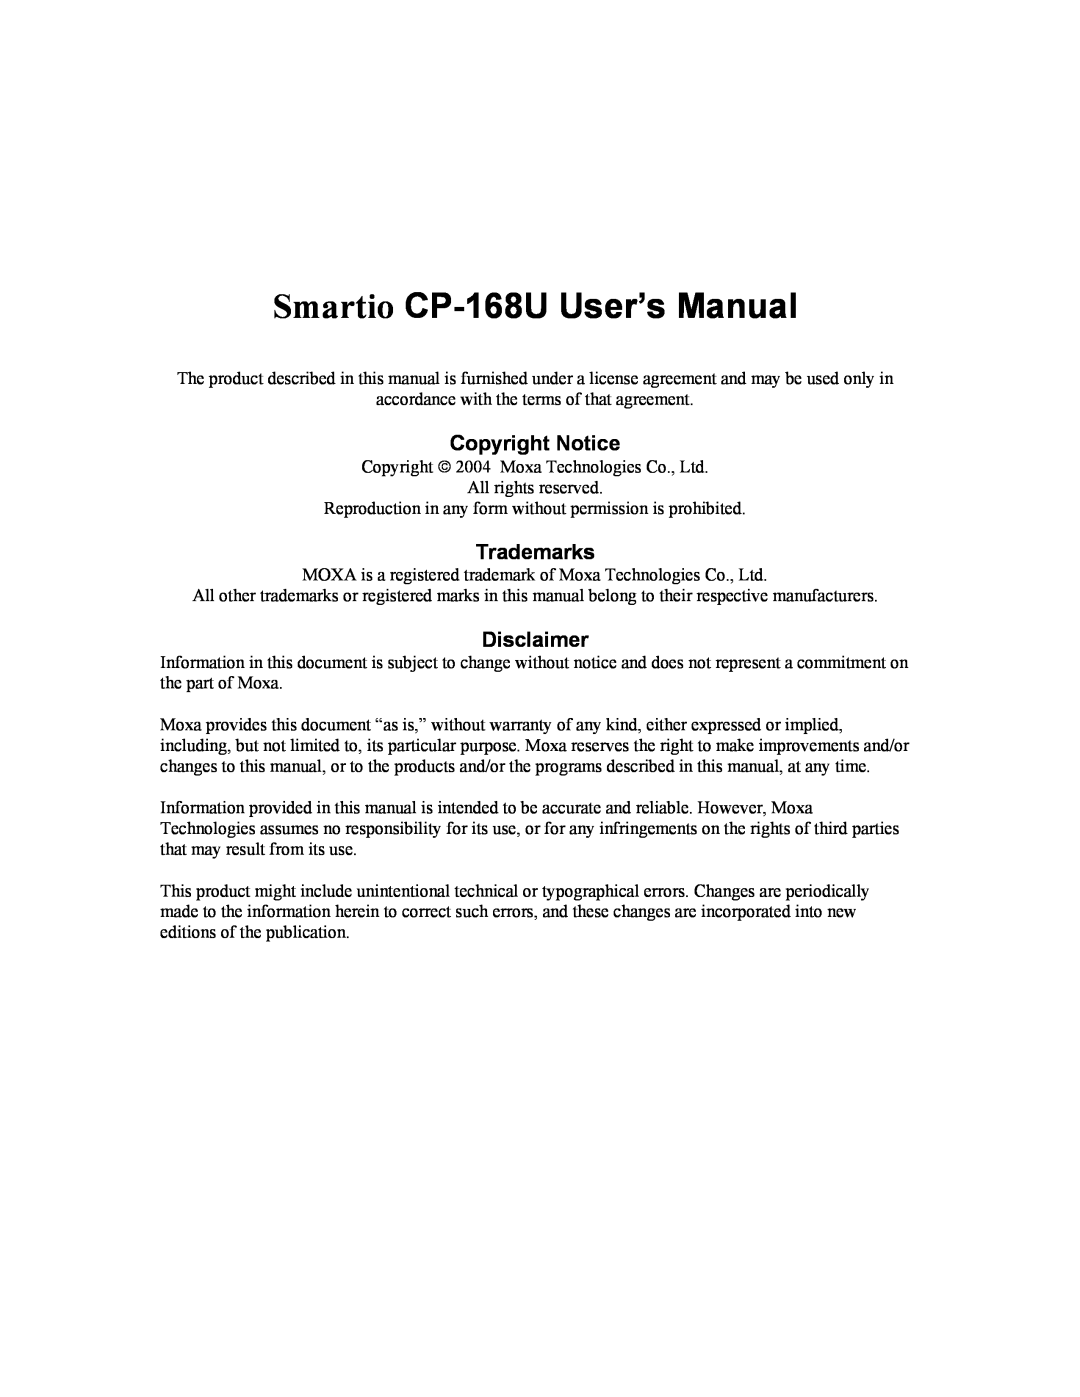 Moxa Technologies user manual Smartio CP-168U User’s Manual, Copyright Notice, Trademarks, Disclaimer 